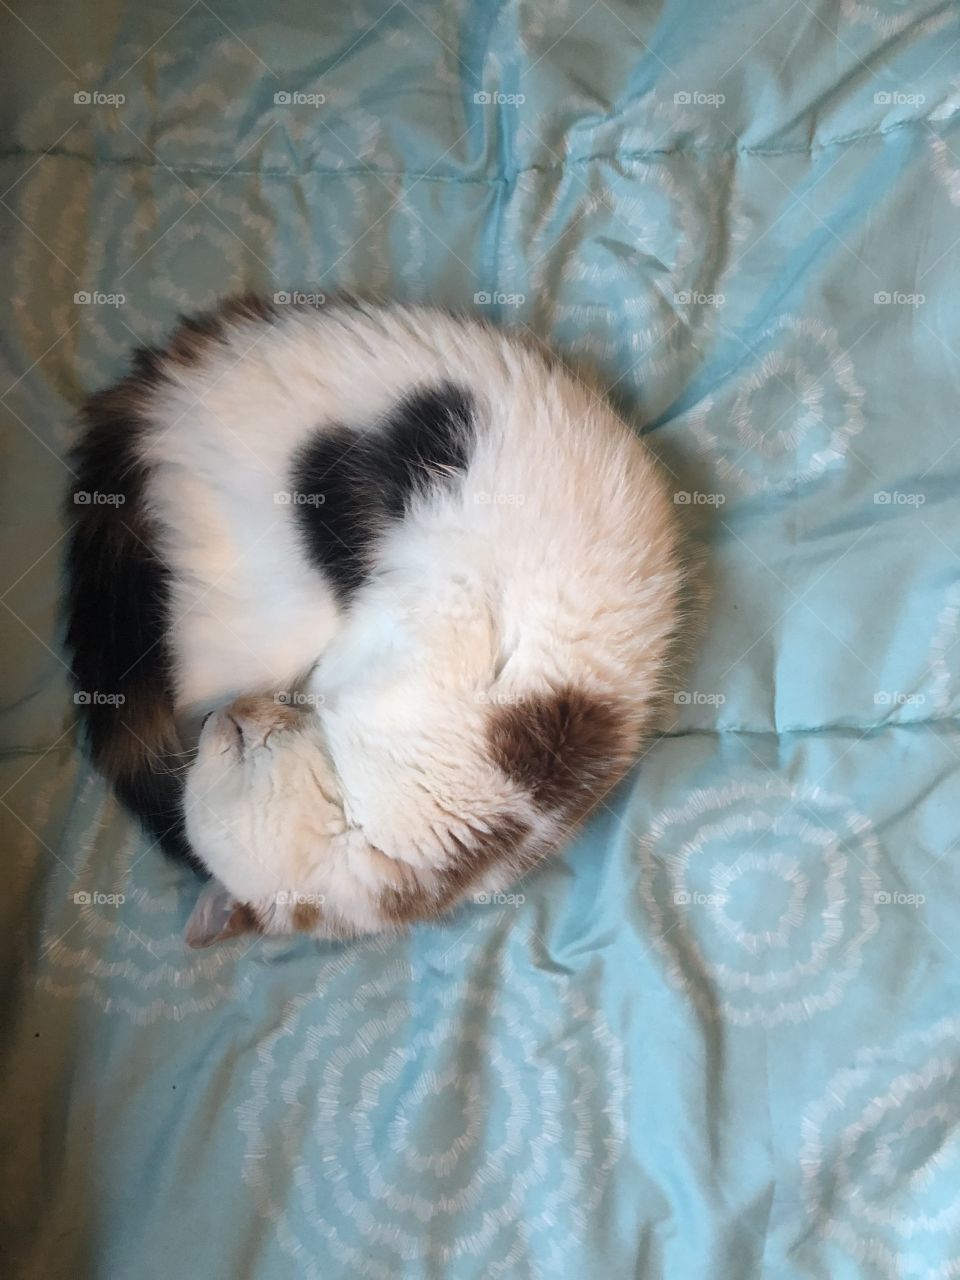 Kitty love ball